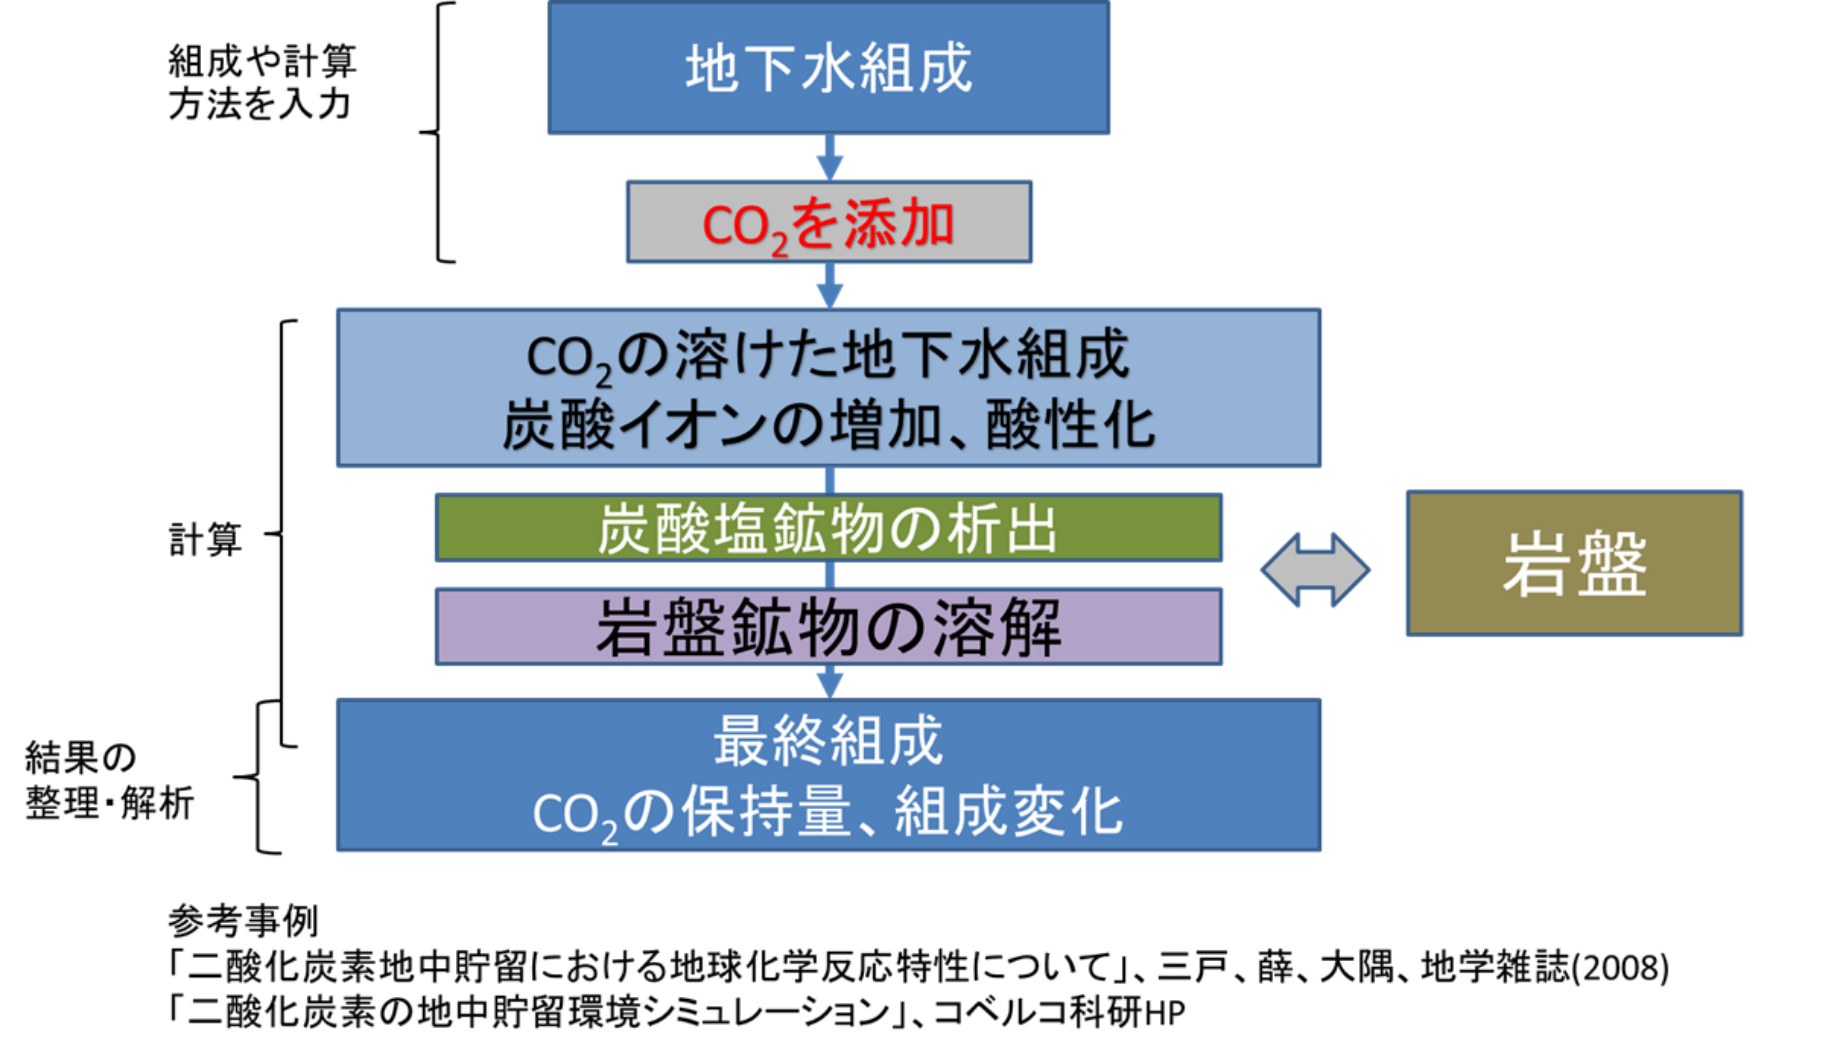 CO2貯留に関する技術